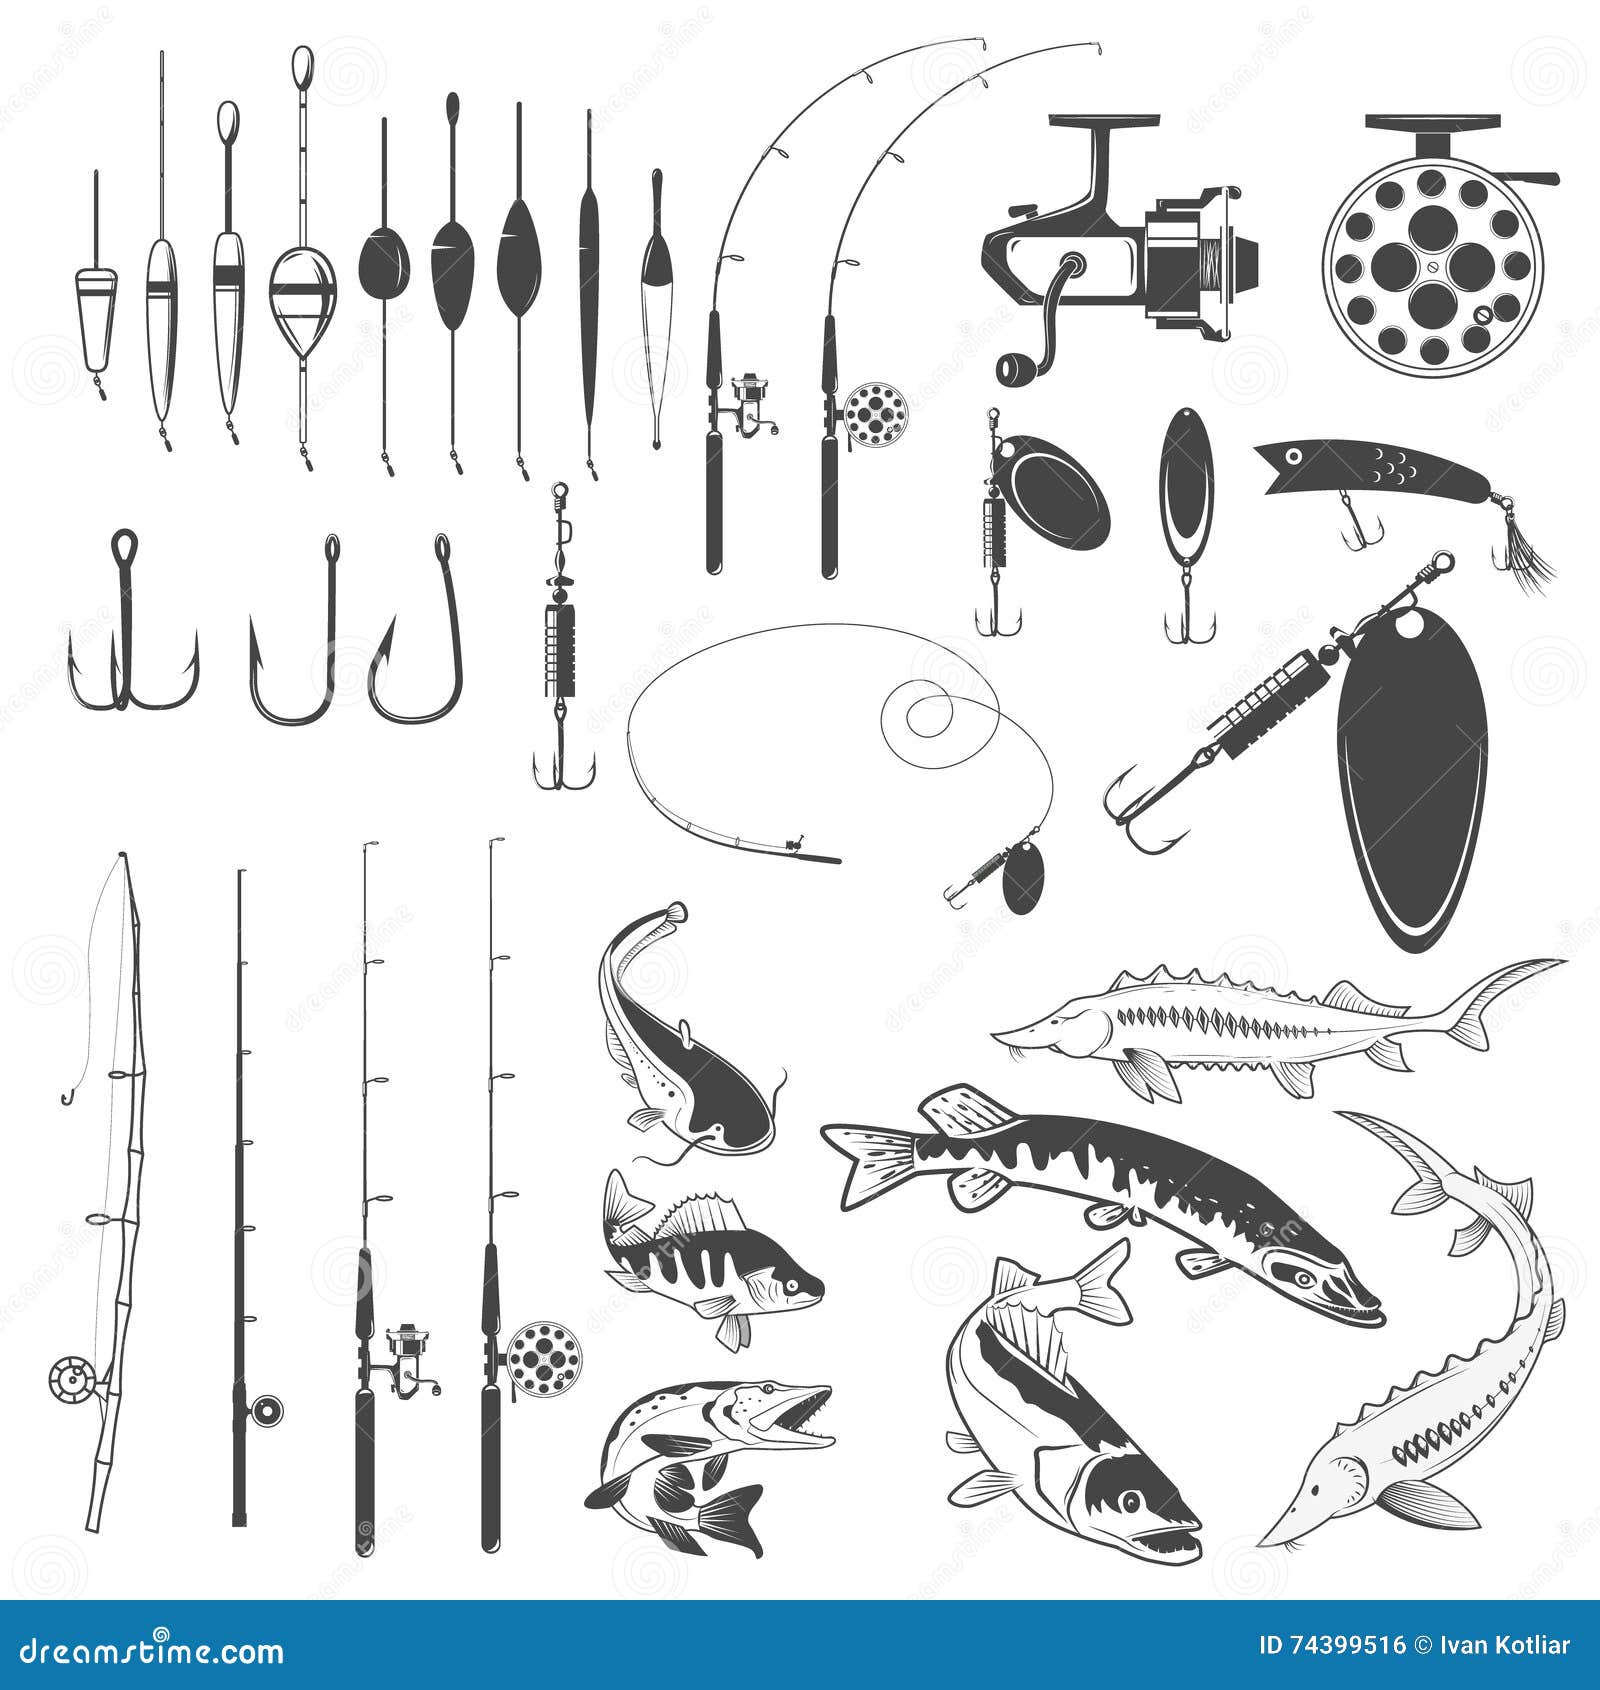 Set of Fishing Tools, River Fish Icons, Equipment for Fishing